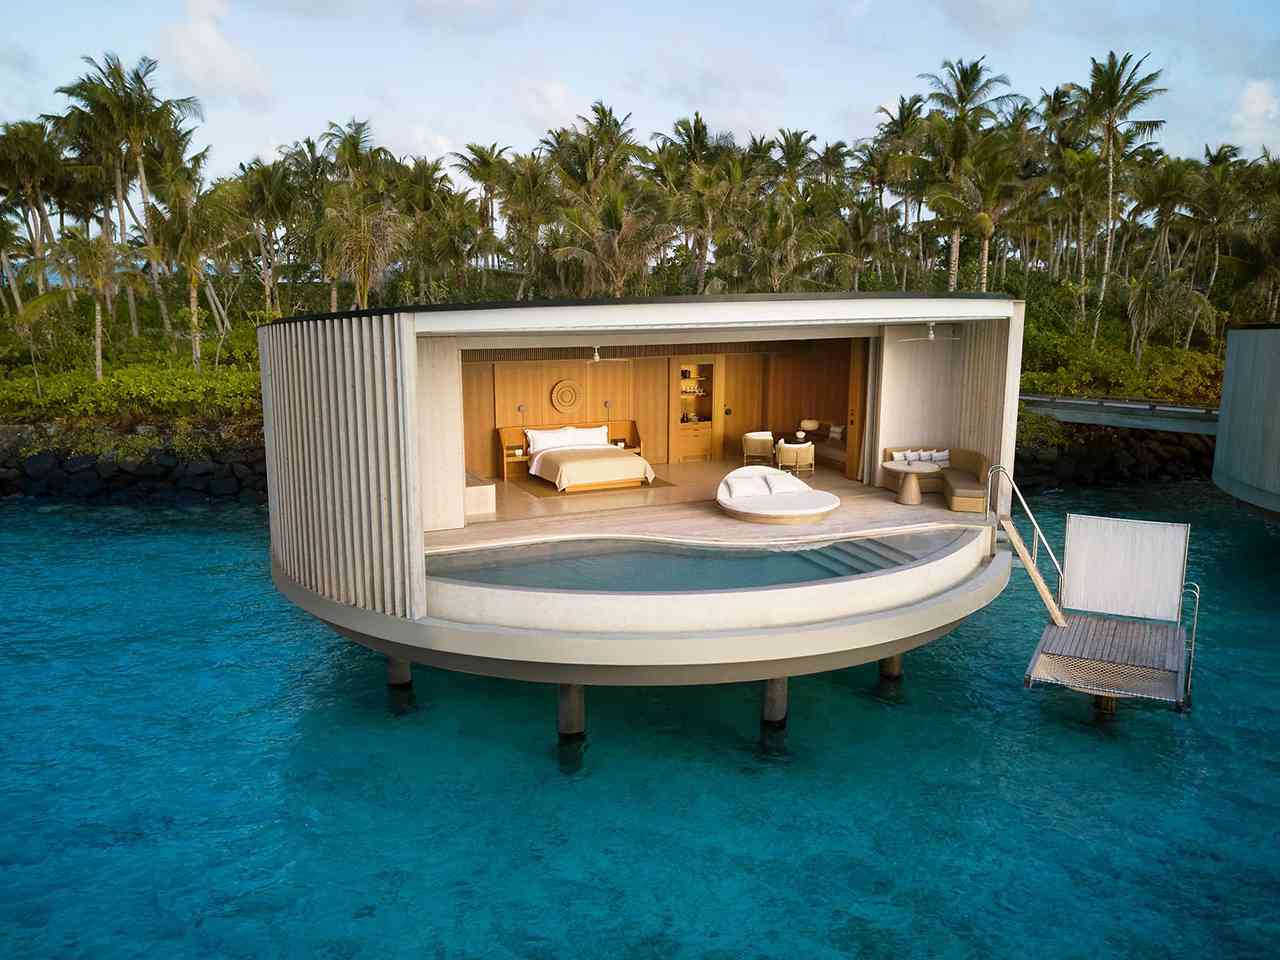 The Ritz-Carlton Maldives Fari Islands Ocean Pool Villa